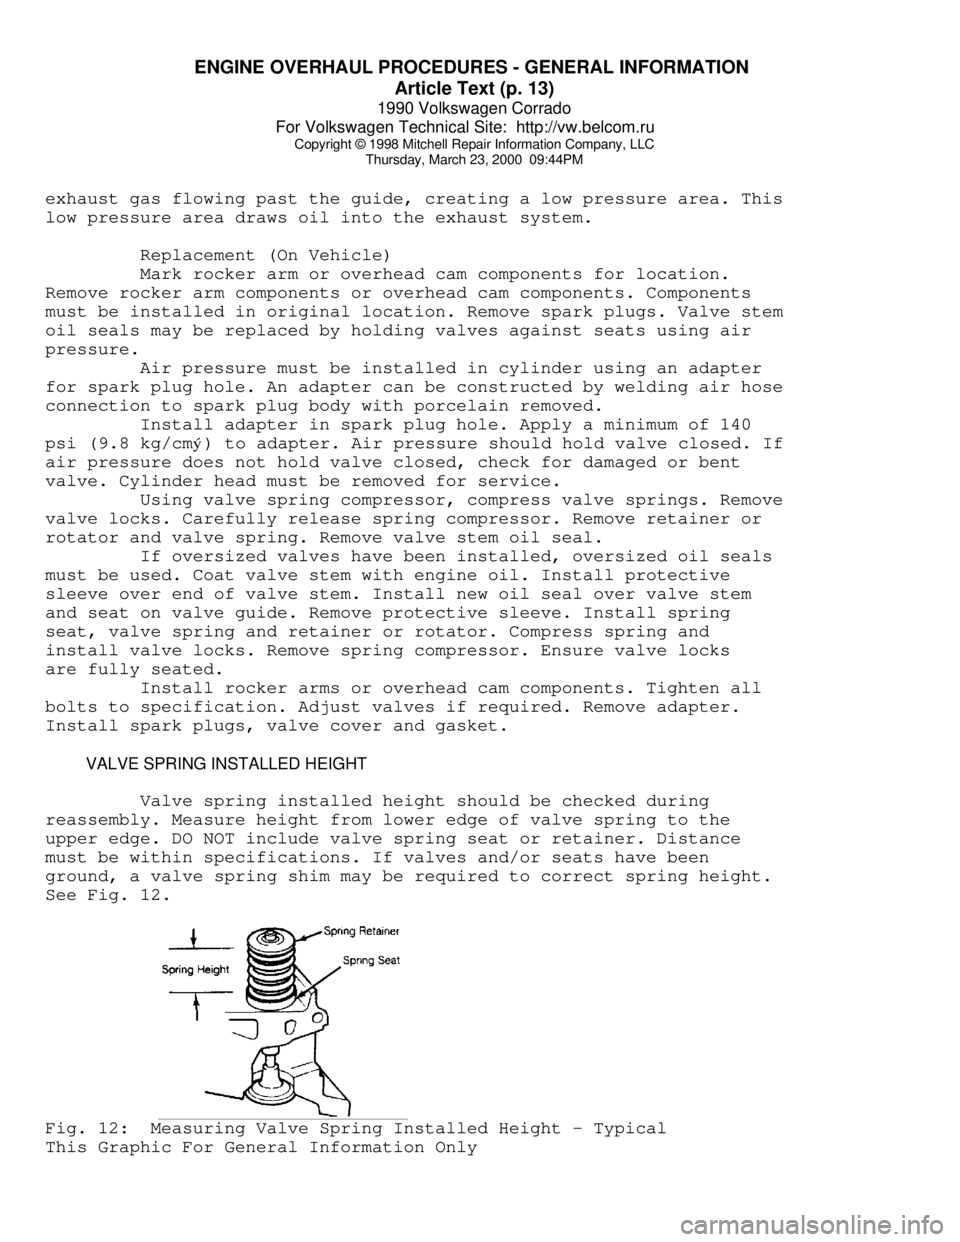 VOLKSWAGEN CORRADO 1990  Repair Manual ENGINE OVERHAUL PROCEDURES - GENERAL INFORMATION 
Article Text (p. 13)
1990 Volkswagen Corrado
For Volkswagen Technical Site:  http://vw.belcom.ru    
Copyright © 1998 Mitchell Repair Information Com